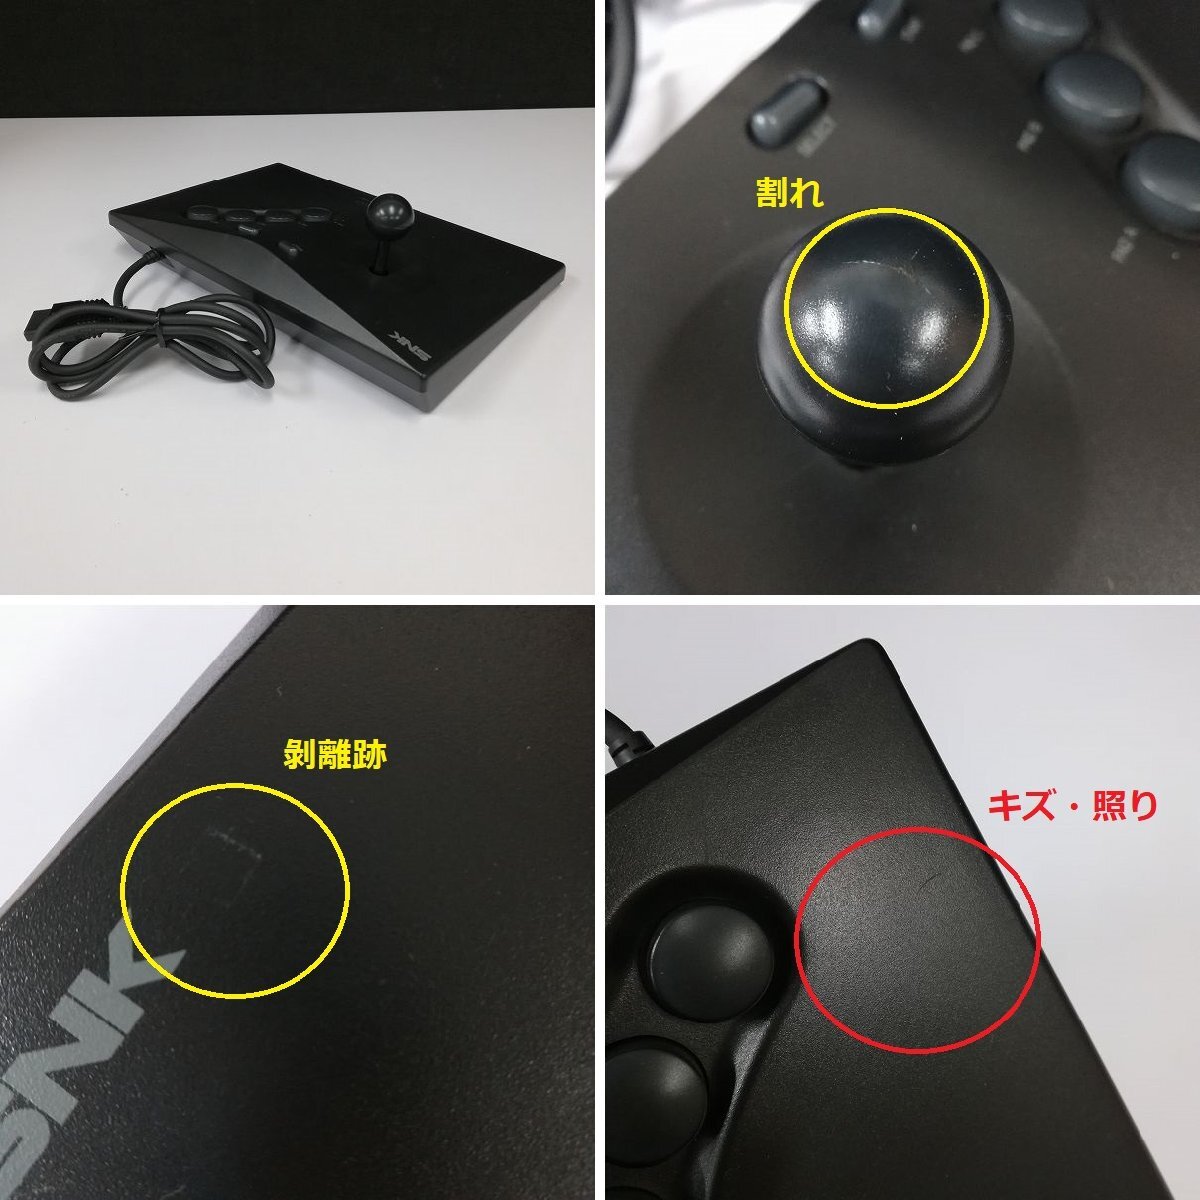 gA461b [ operation goods ] SNK Neo geo exclusive use controller /esen Kei NEOGEO | game X